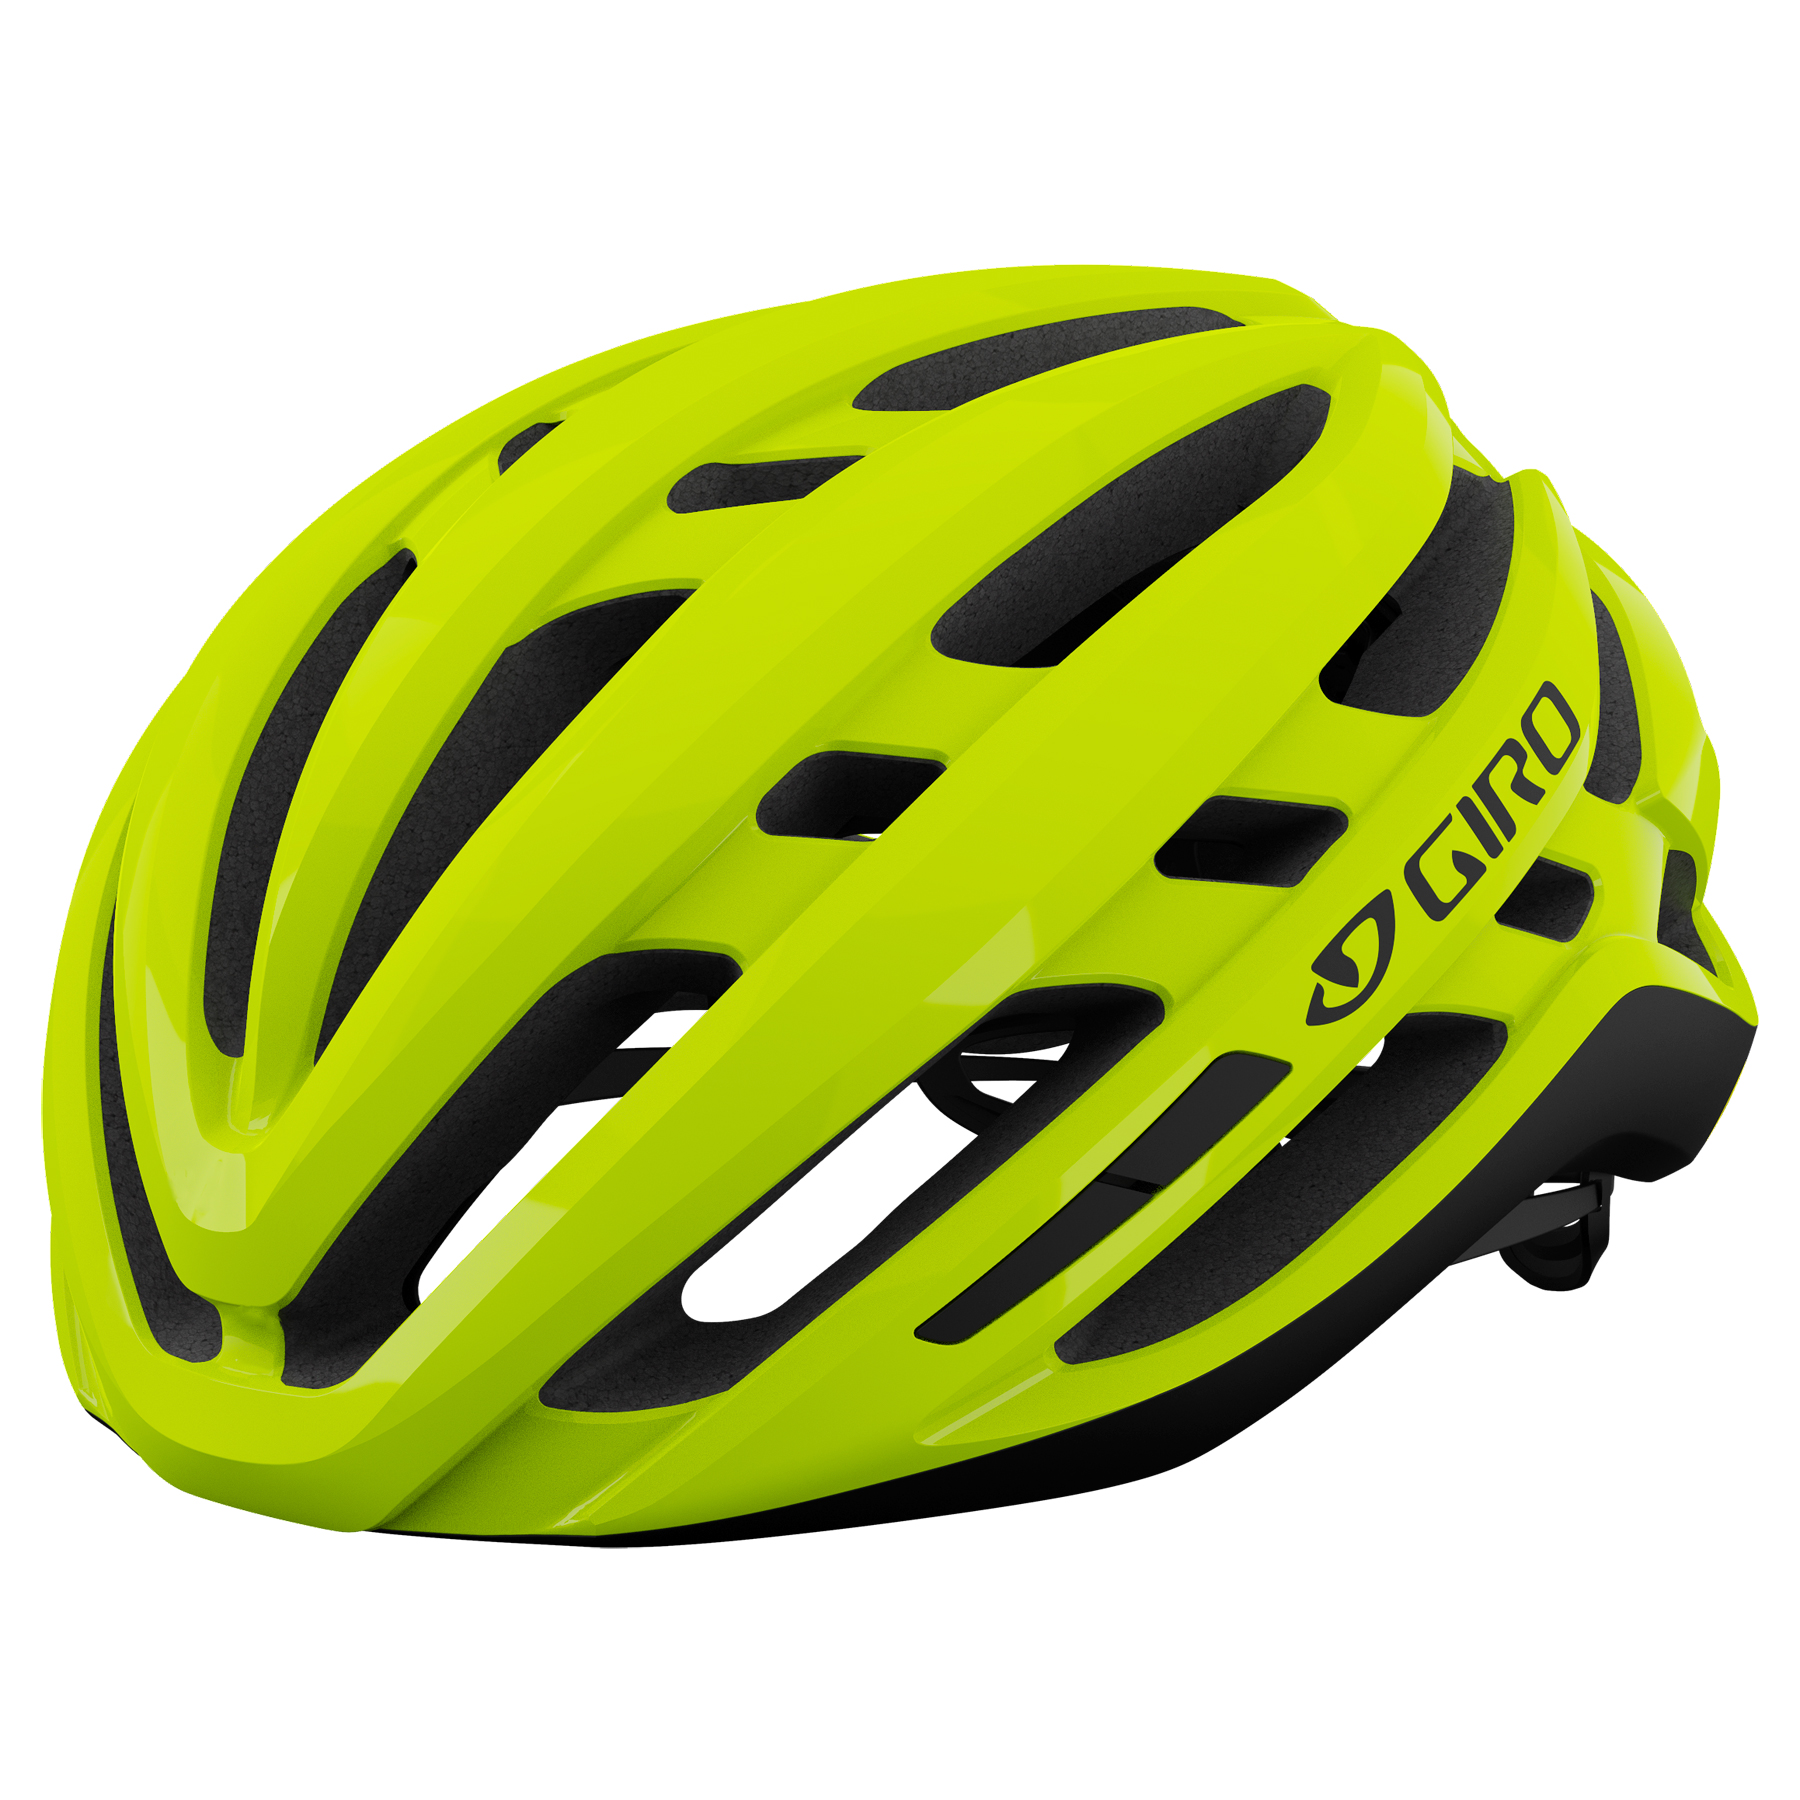 Picture of Giro Agilis Helmet - highlight yellow